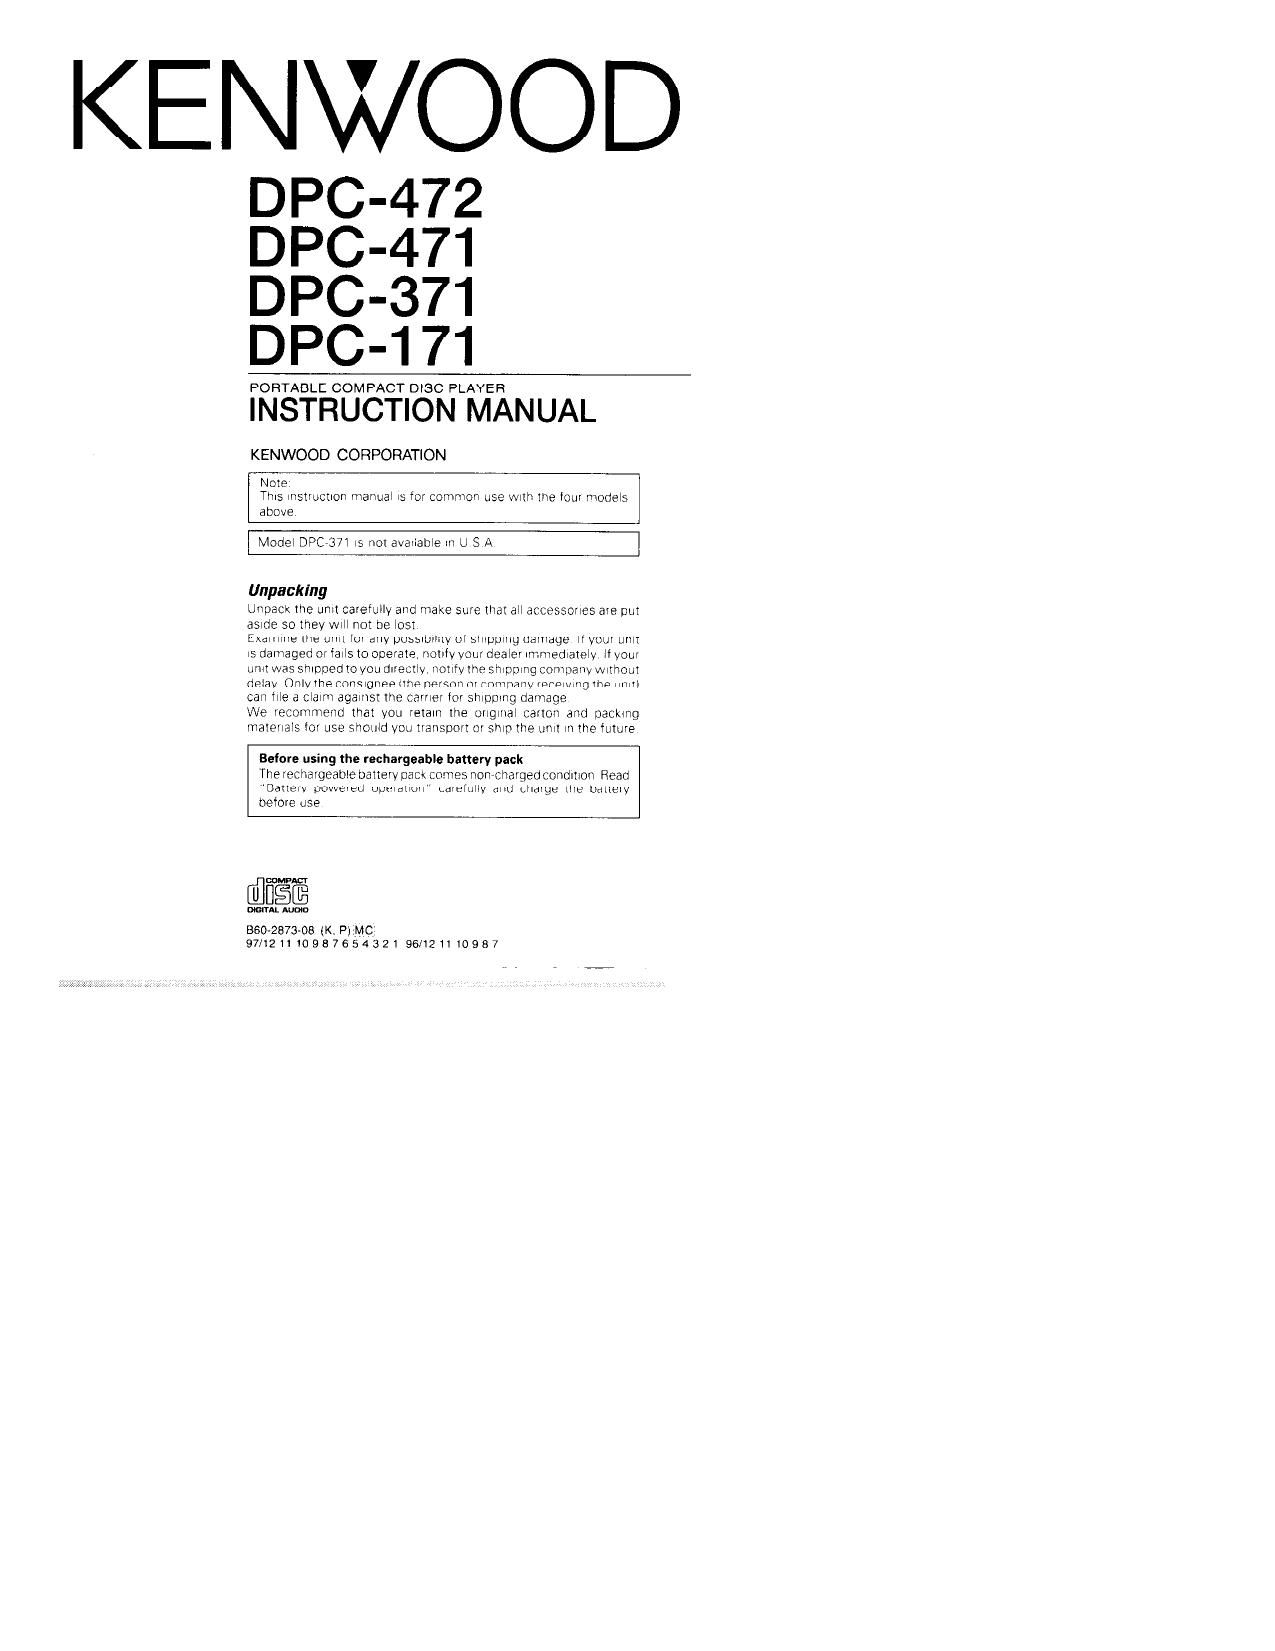 Kenwood DPC 371 Owners Manual